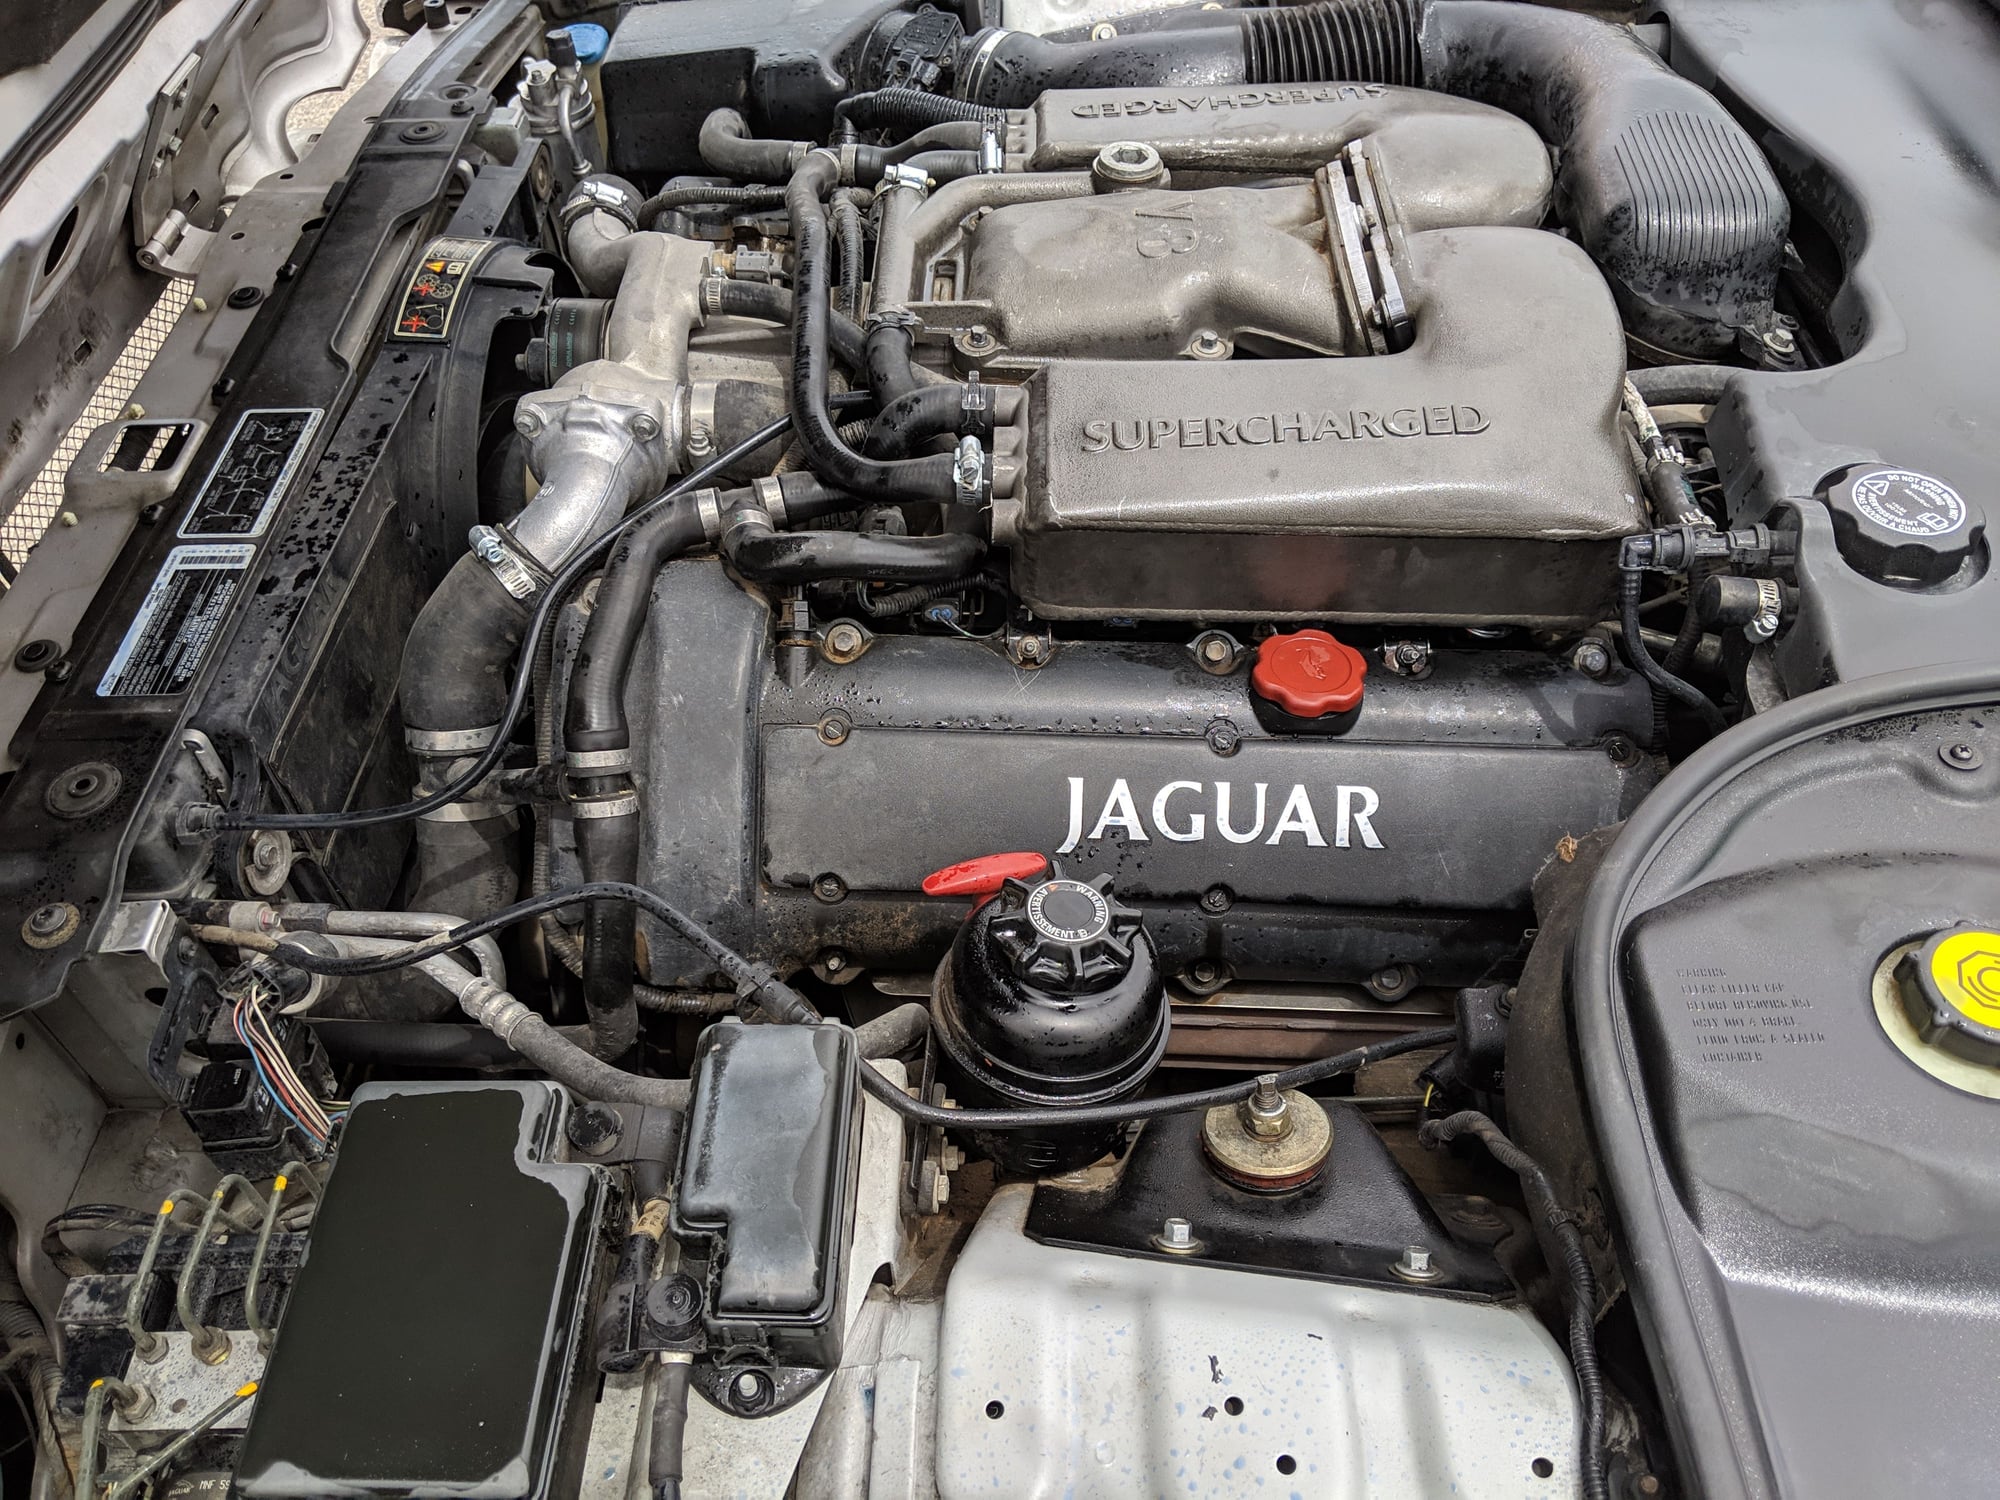 2000 Jaguar XJR - 2000 Jaguar XJR low miles for year - Used - VIN SAJDA15B8YMF20521 - 125,050 Miles - 8 cyl - 2WD - Automatic - Sedan - Silver - El Paso, TX 79938, United States